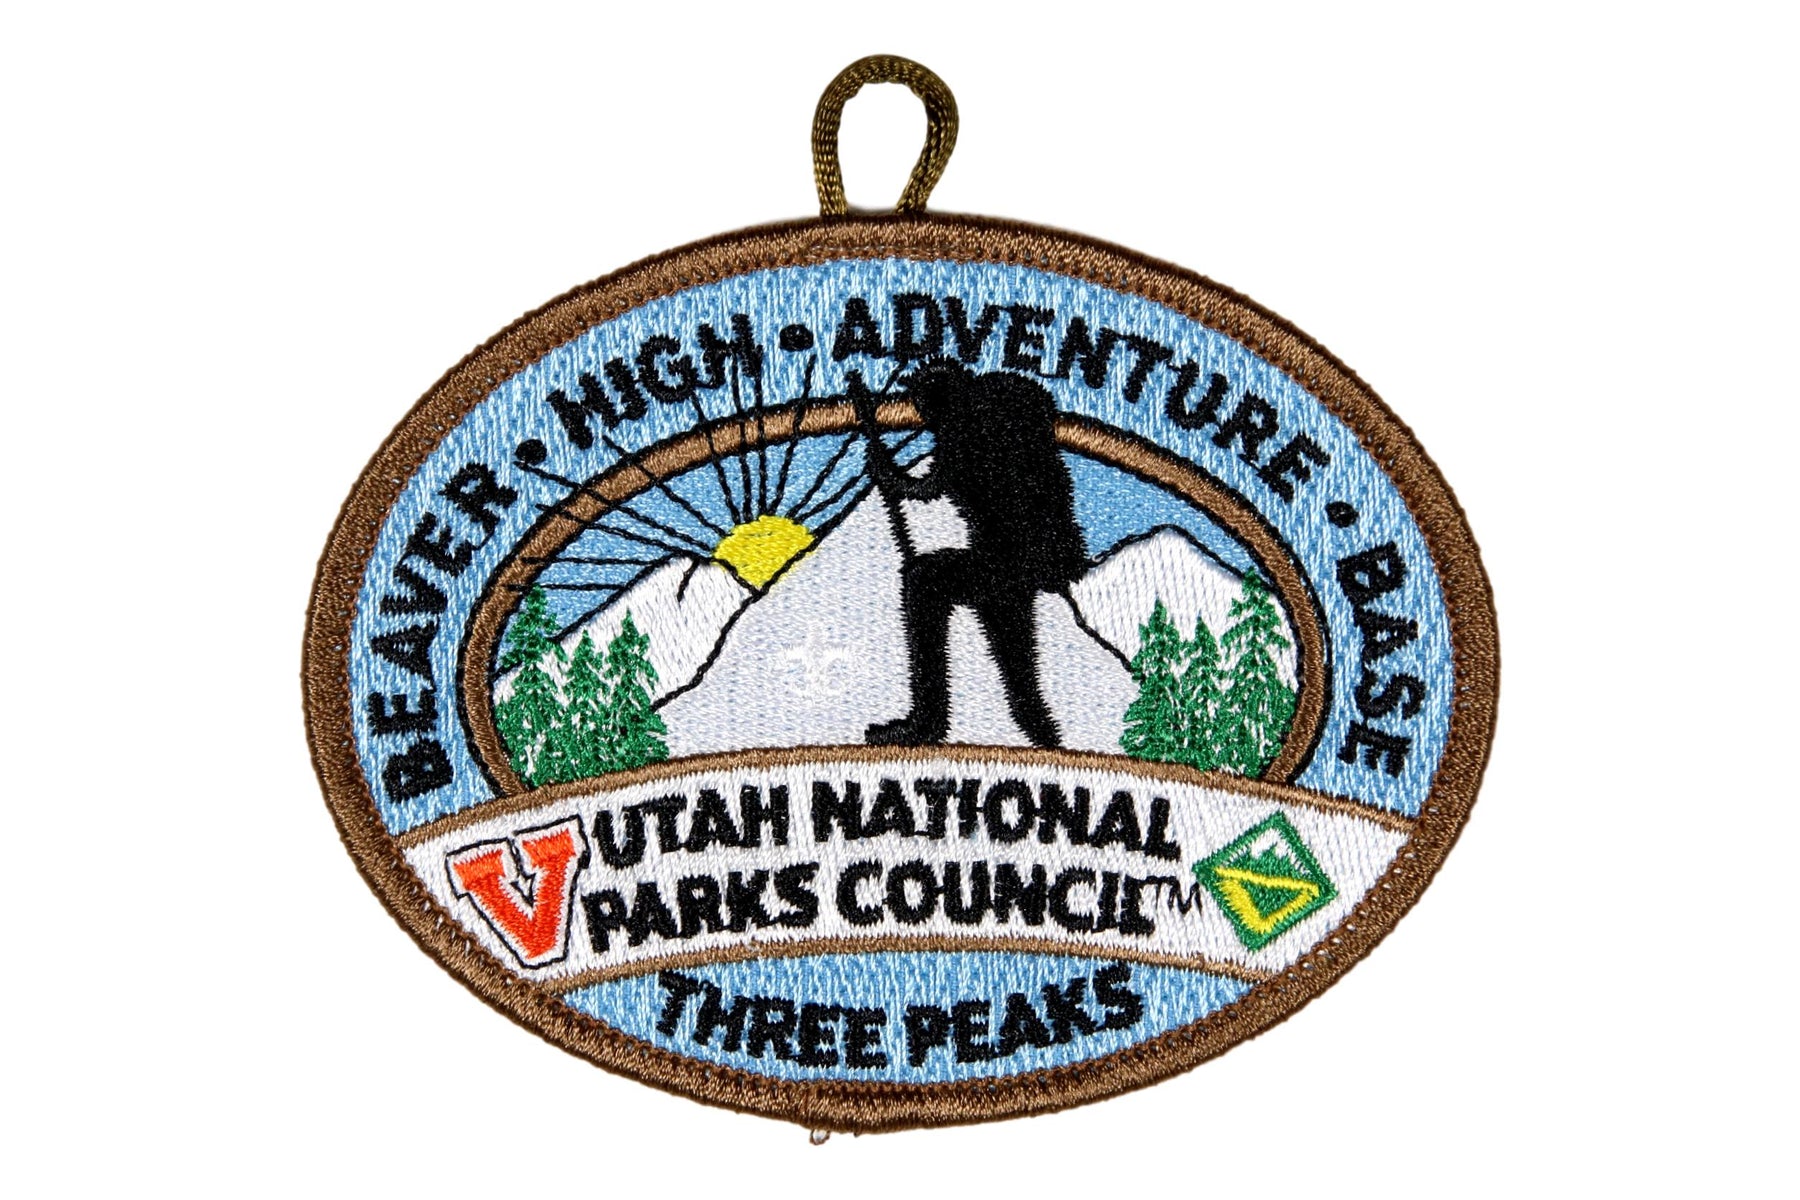 Beaver High Adventure Base Camp Three Peaks Award